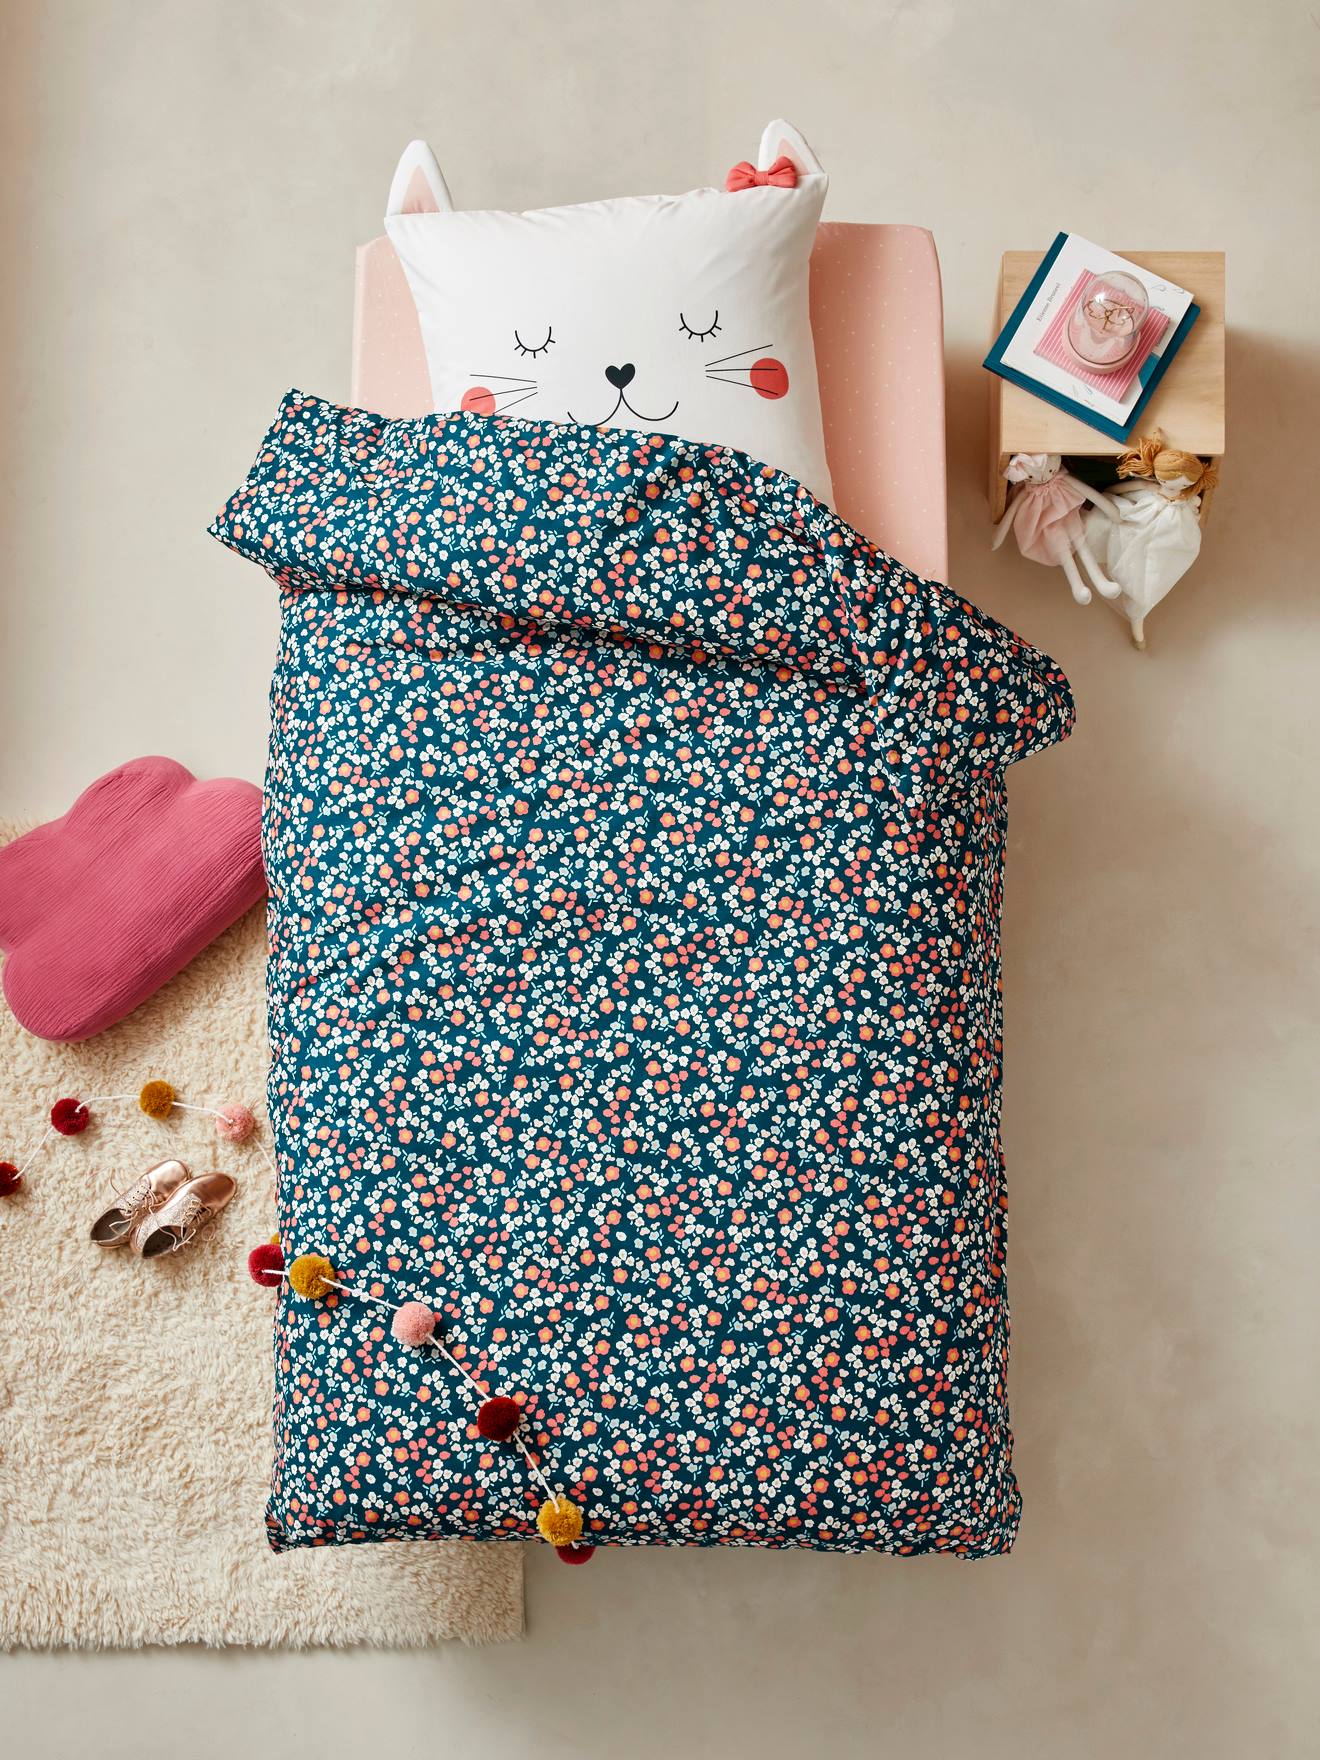 Duvet Cover + Pillowcase Set for Children, Chat Waou Theme dark blue